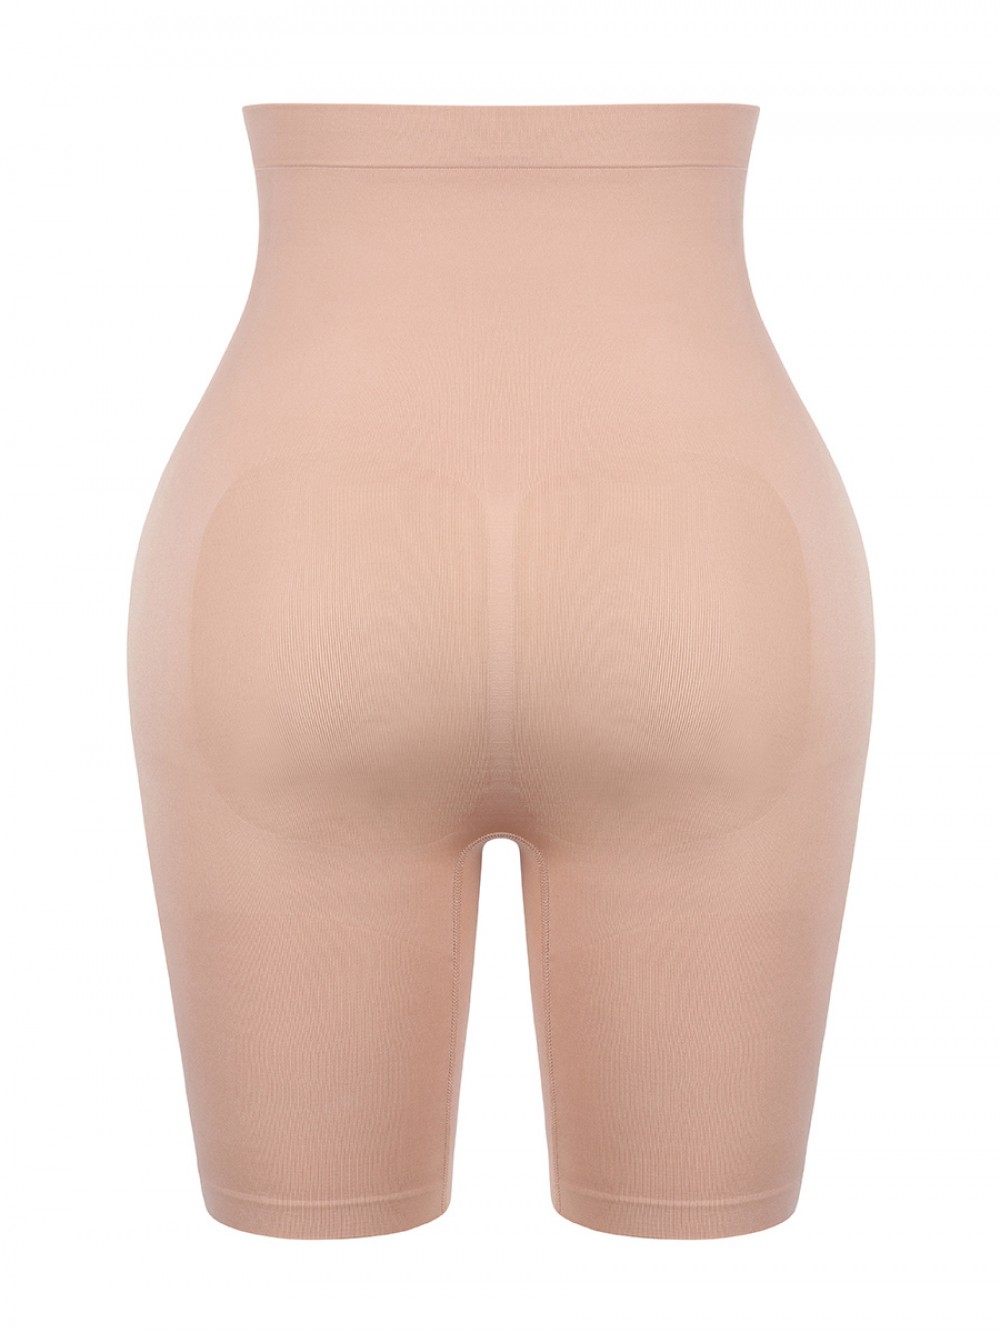 Nude Seamless Butt Lifter Shorts Anti-Slip Elastic Material